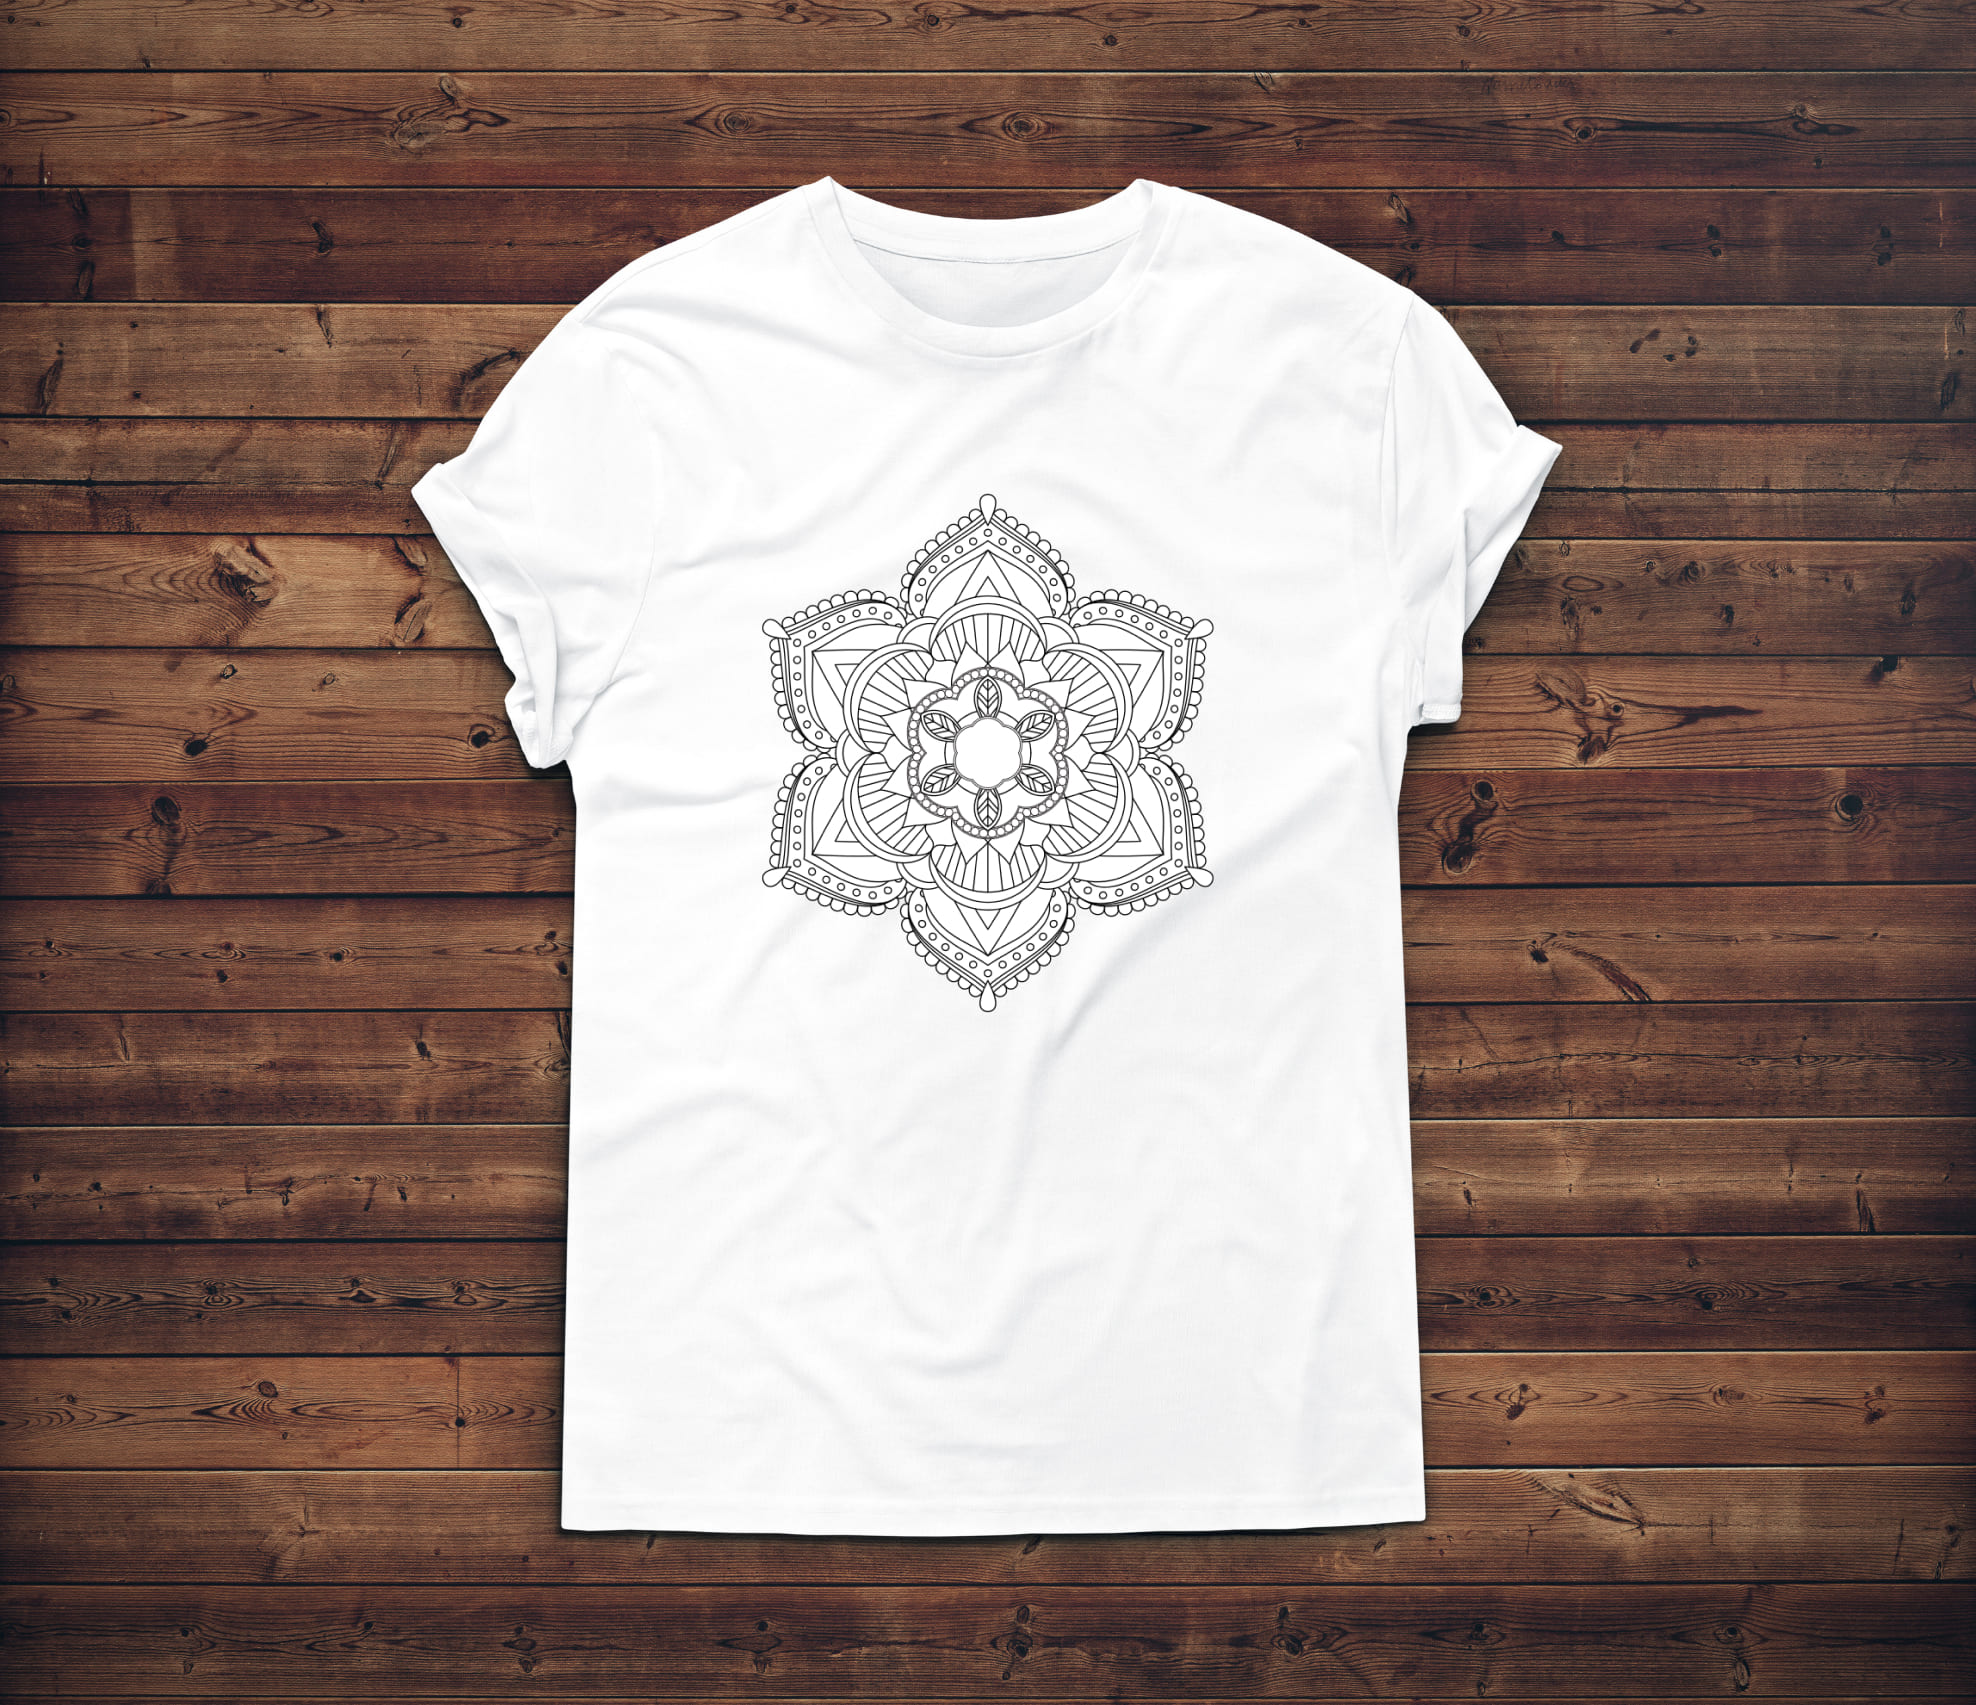 Minimalistic mandala on the white t-shirt.